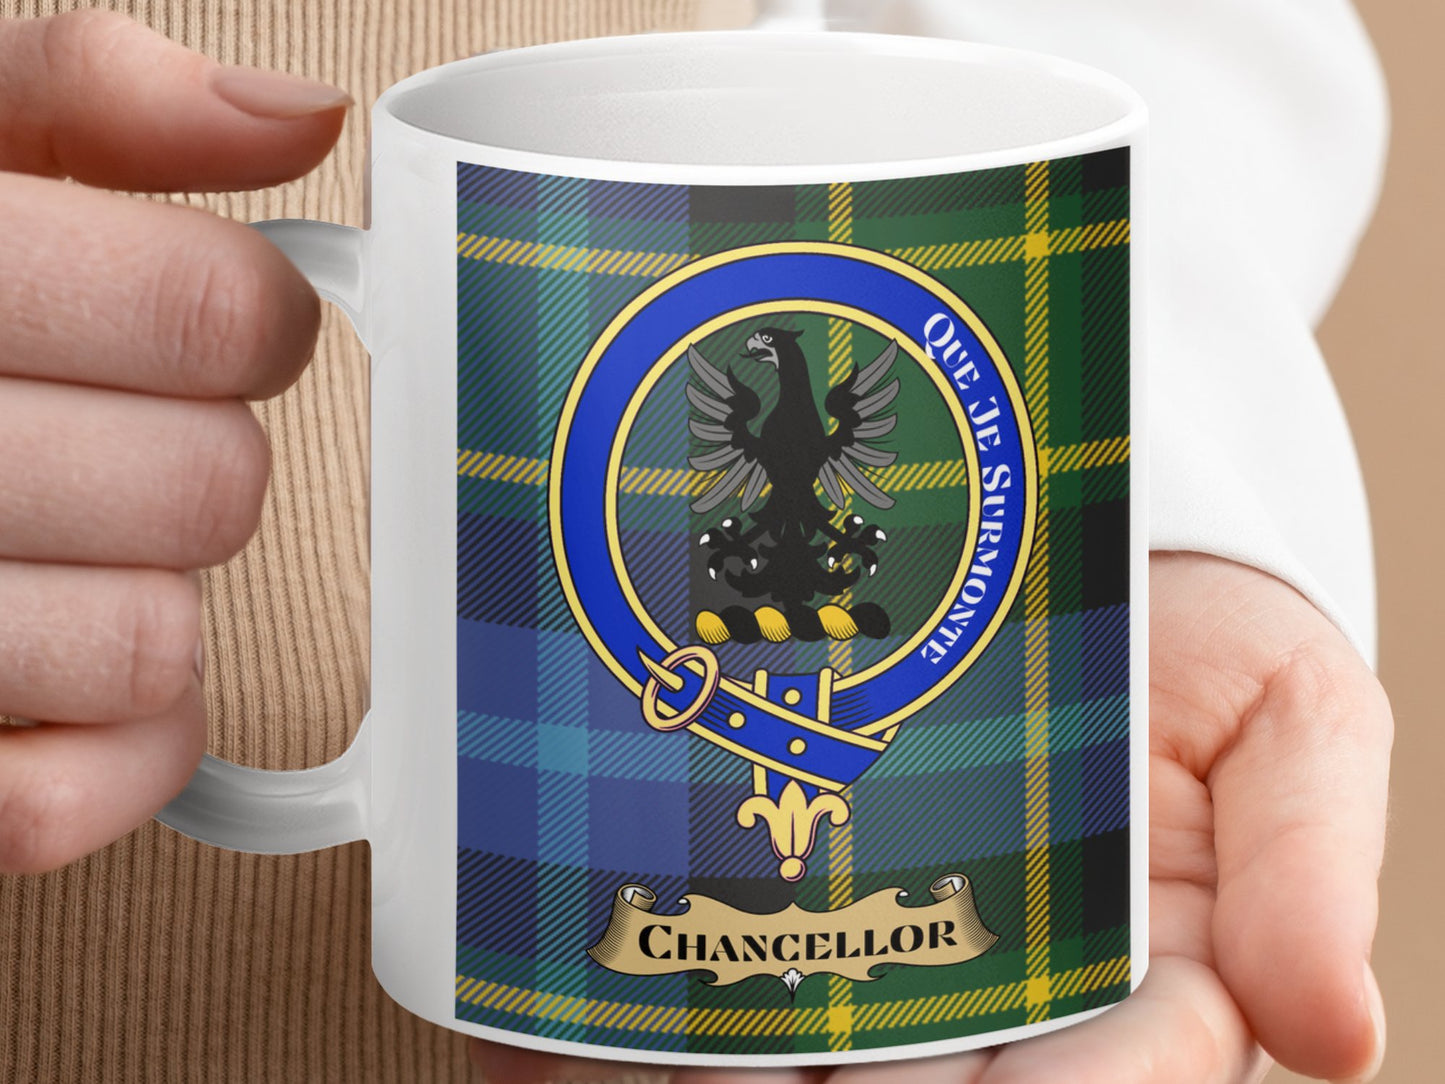 Chancellor Scottish Tartan Crest Plaid Pattern Mug - Living Stone Gifts